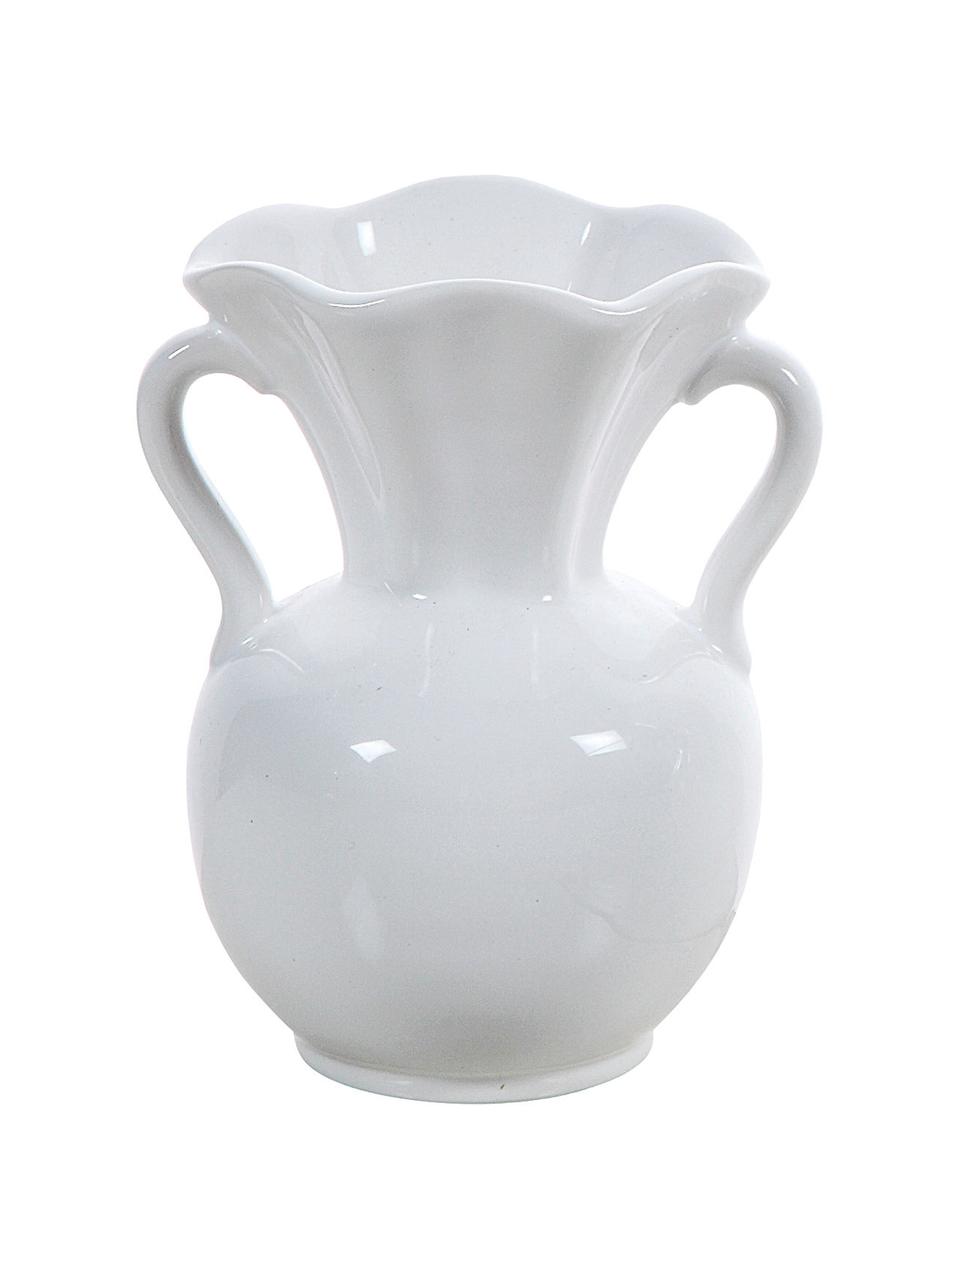 Keramik-Vasen-Set Mico in Weiß, 3-tlg., Keramik, Weiß, B 10 x H 12 cm